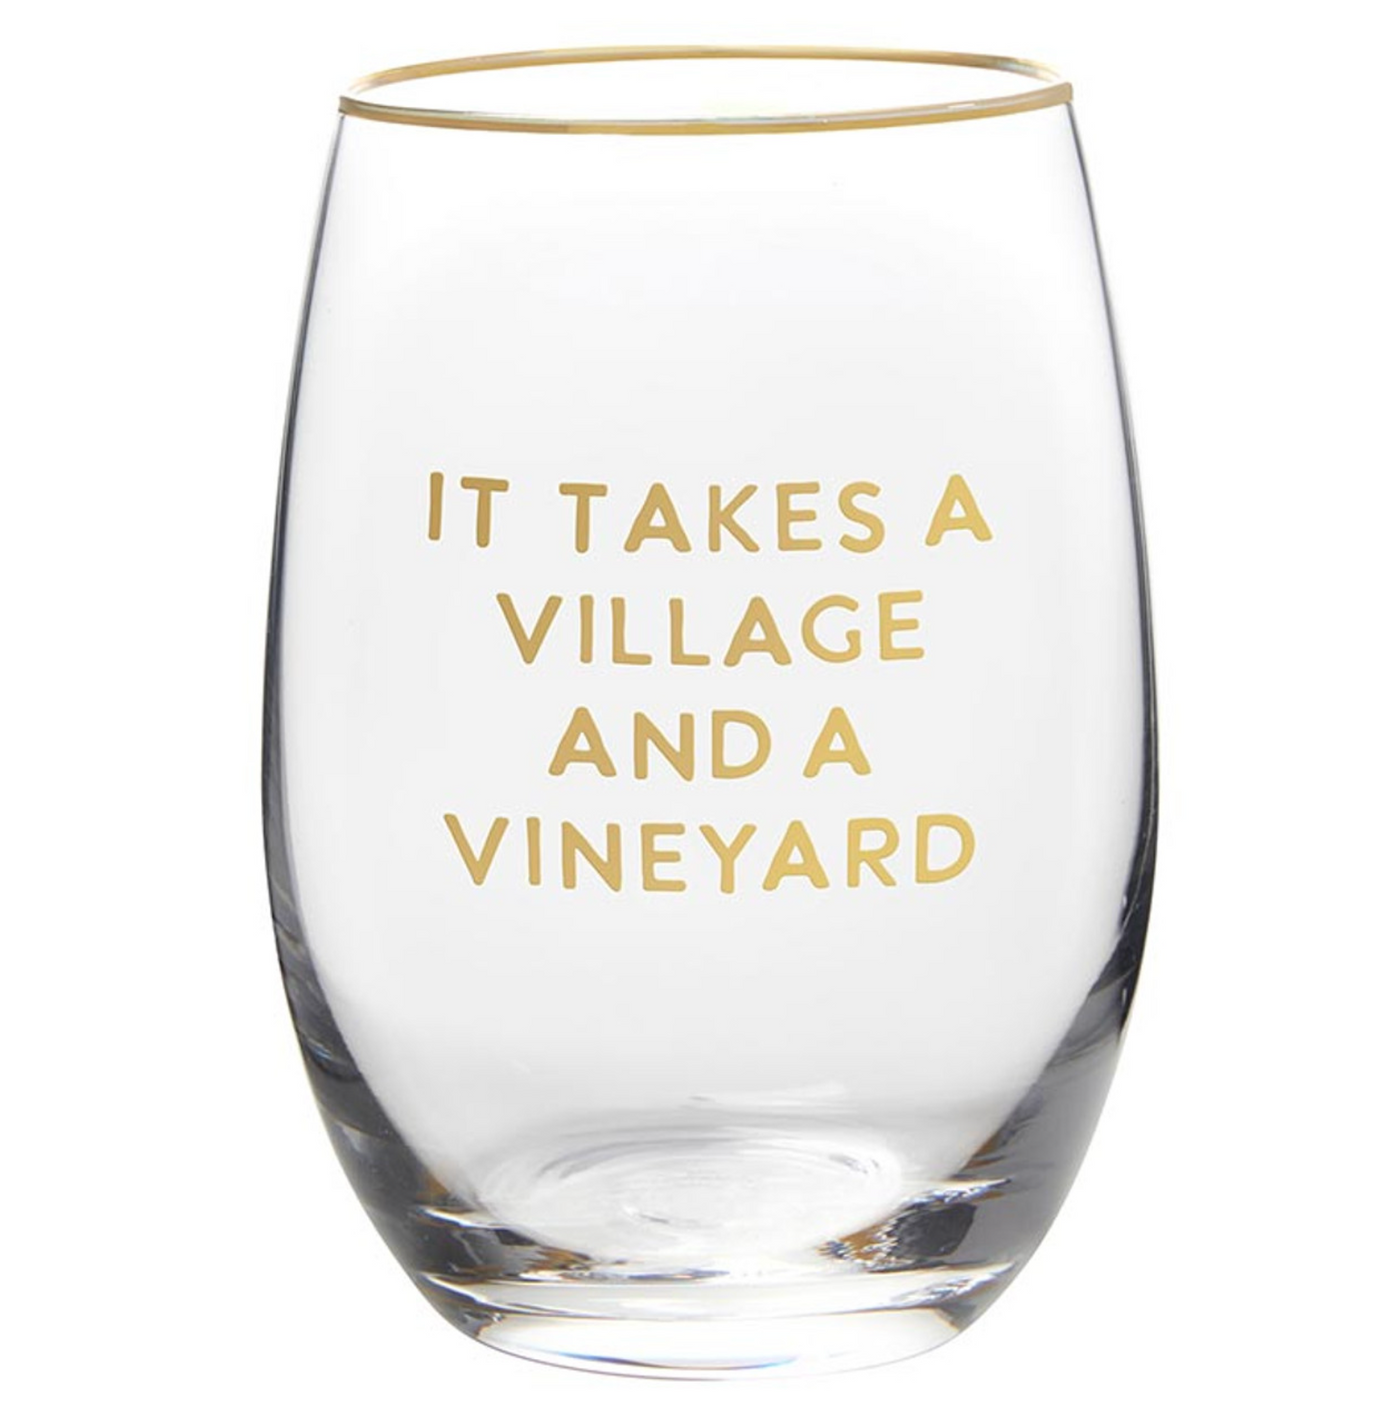 WINE GLASS "IT TAKES A VILLAGE"